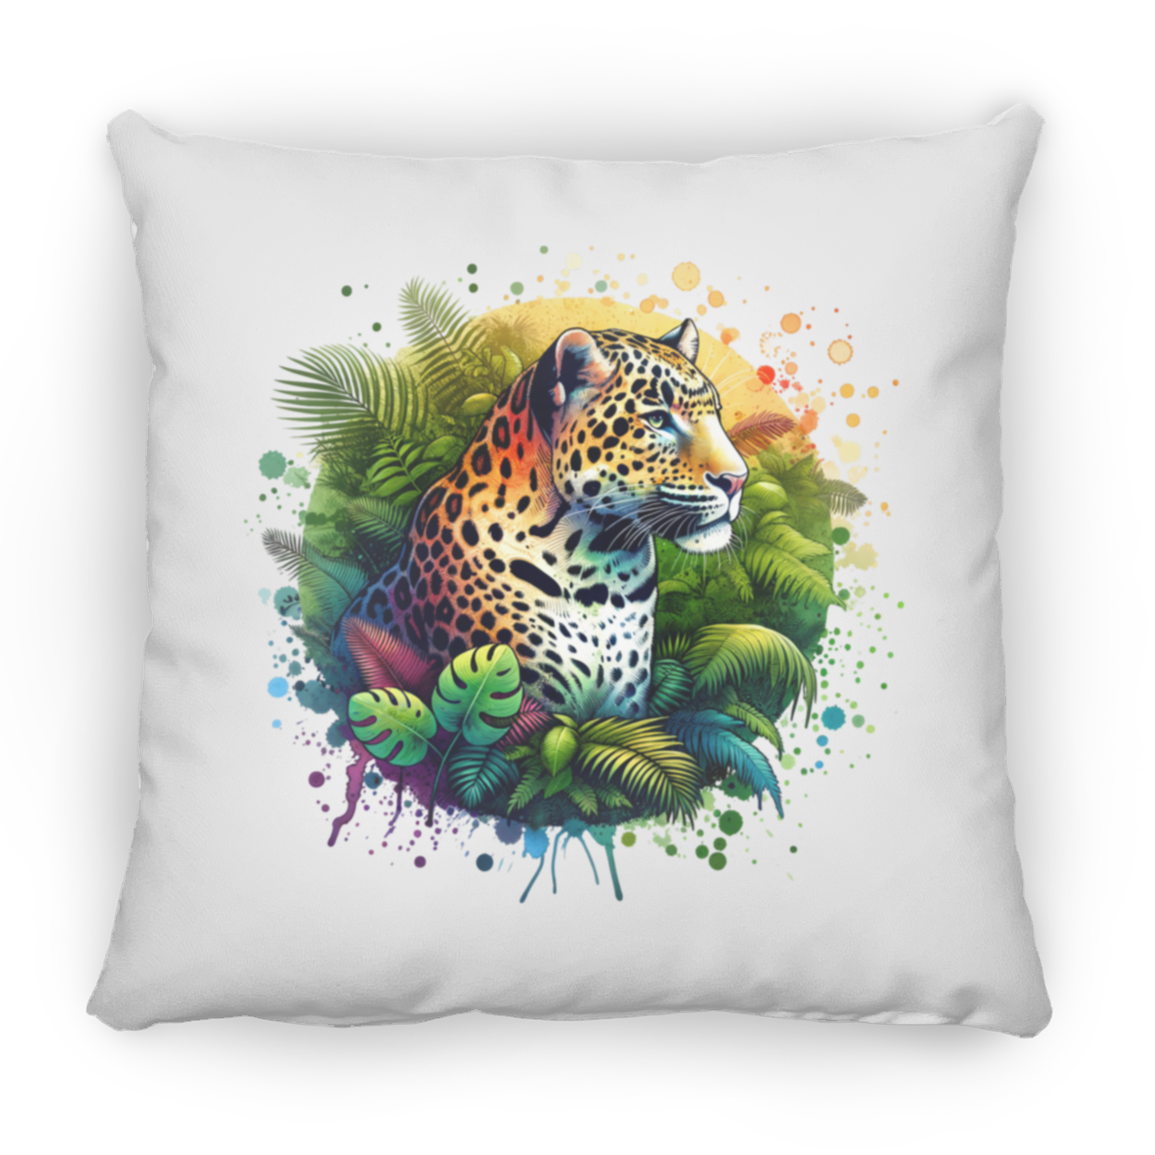 Leopard Jungle Circle - Pillows